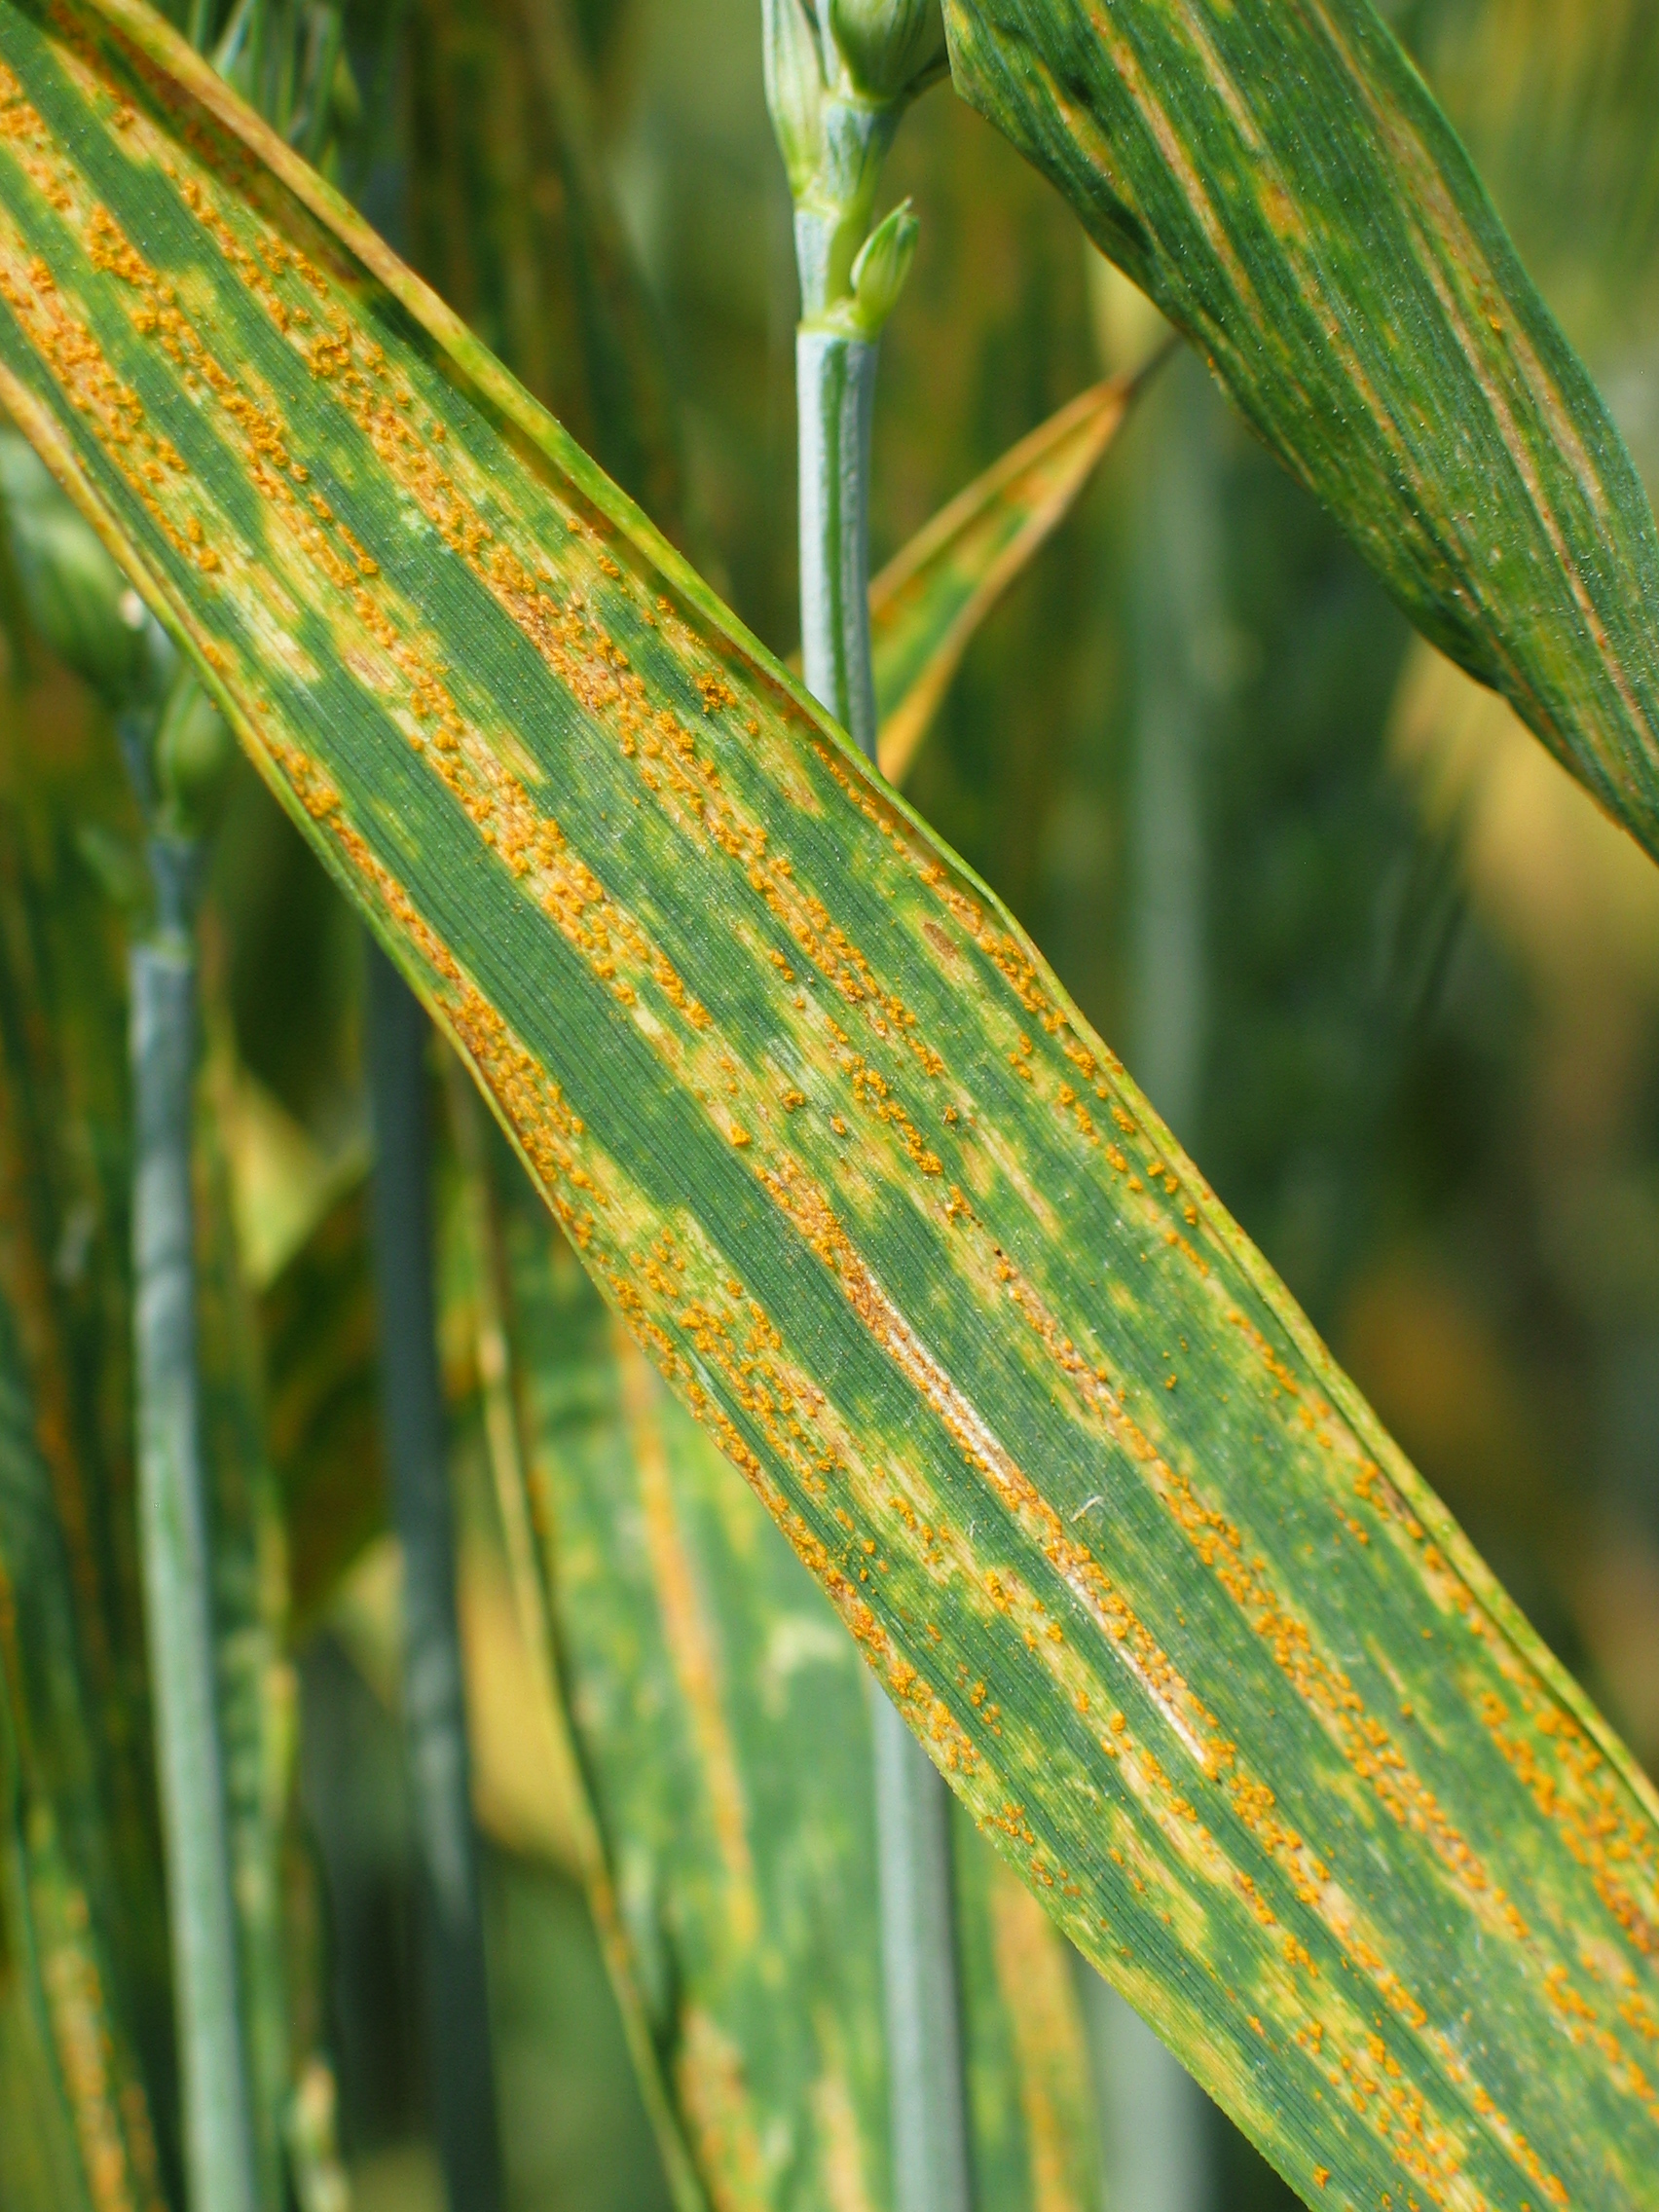 feuille de blé infectée par Puccinia striiformis f. sp. tritici